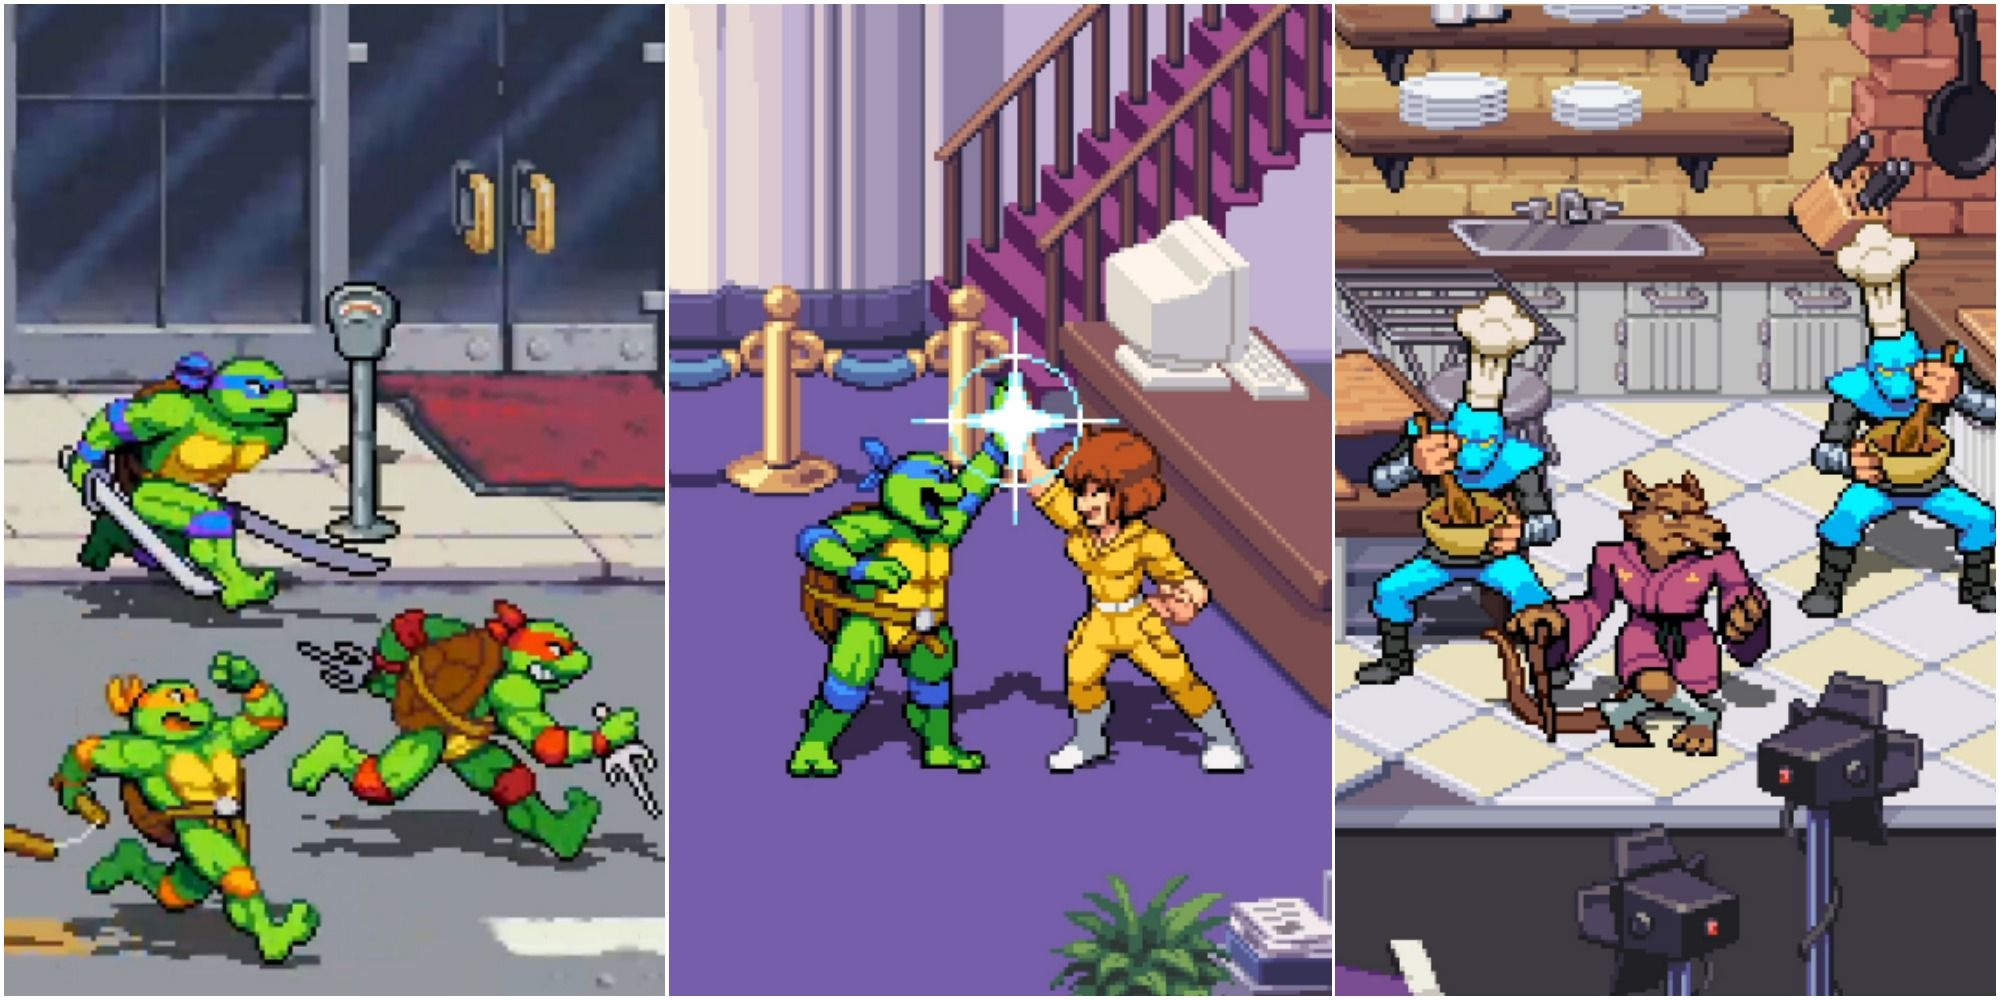 Teenage Mutant Ninja Turtles: Shredder's Revenge Cheats & Trainers for PC